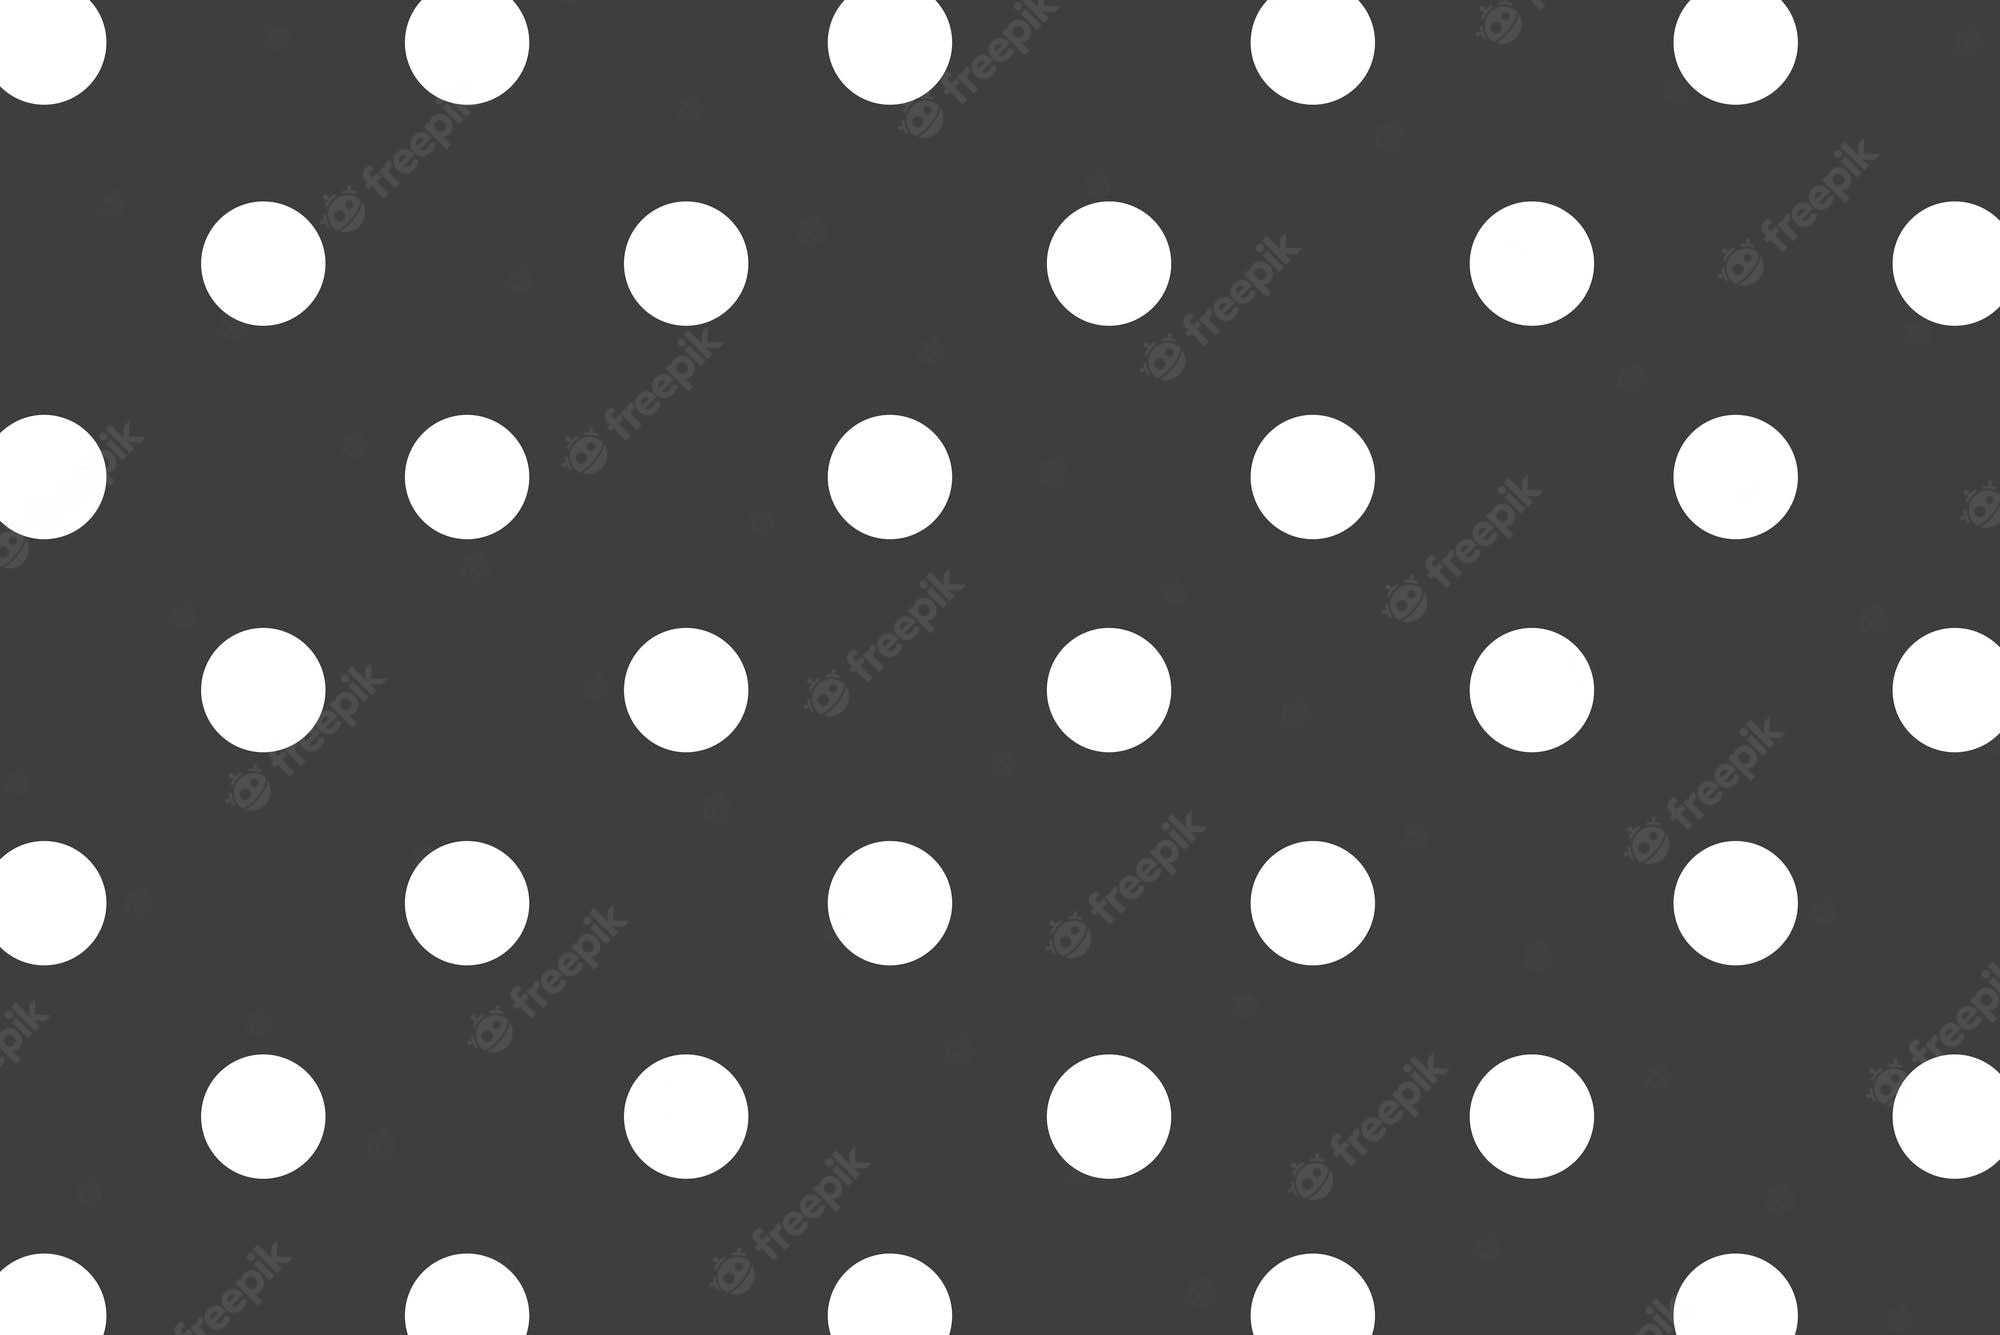 Black And White Polka Dot Background